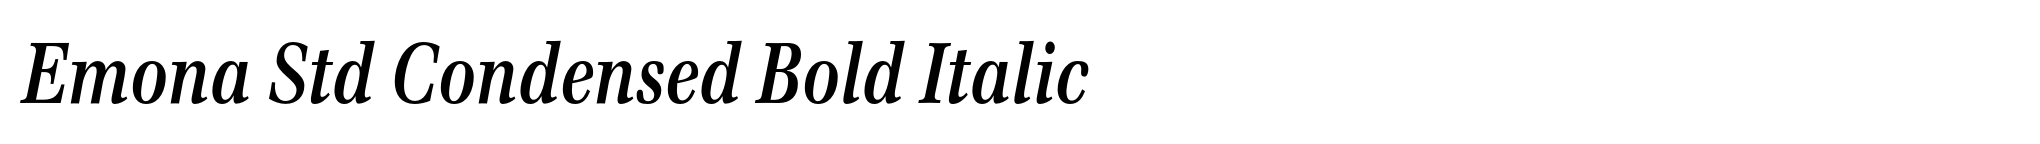 Emona Std Condensed Bold Italic image